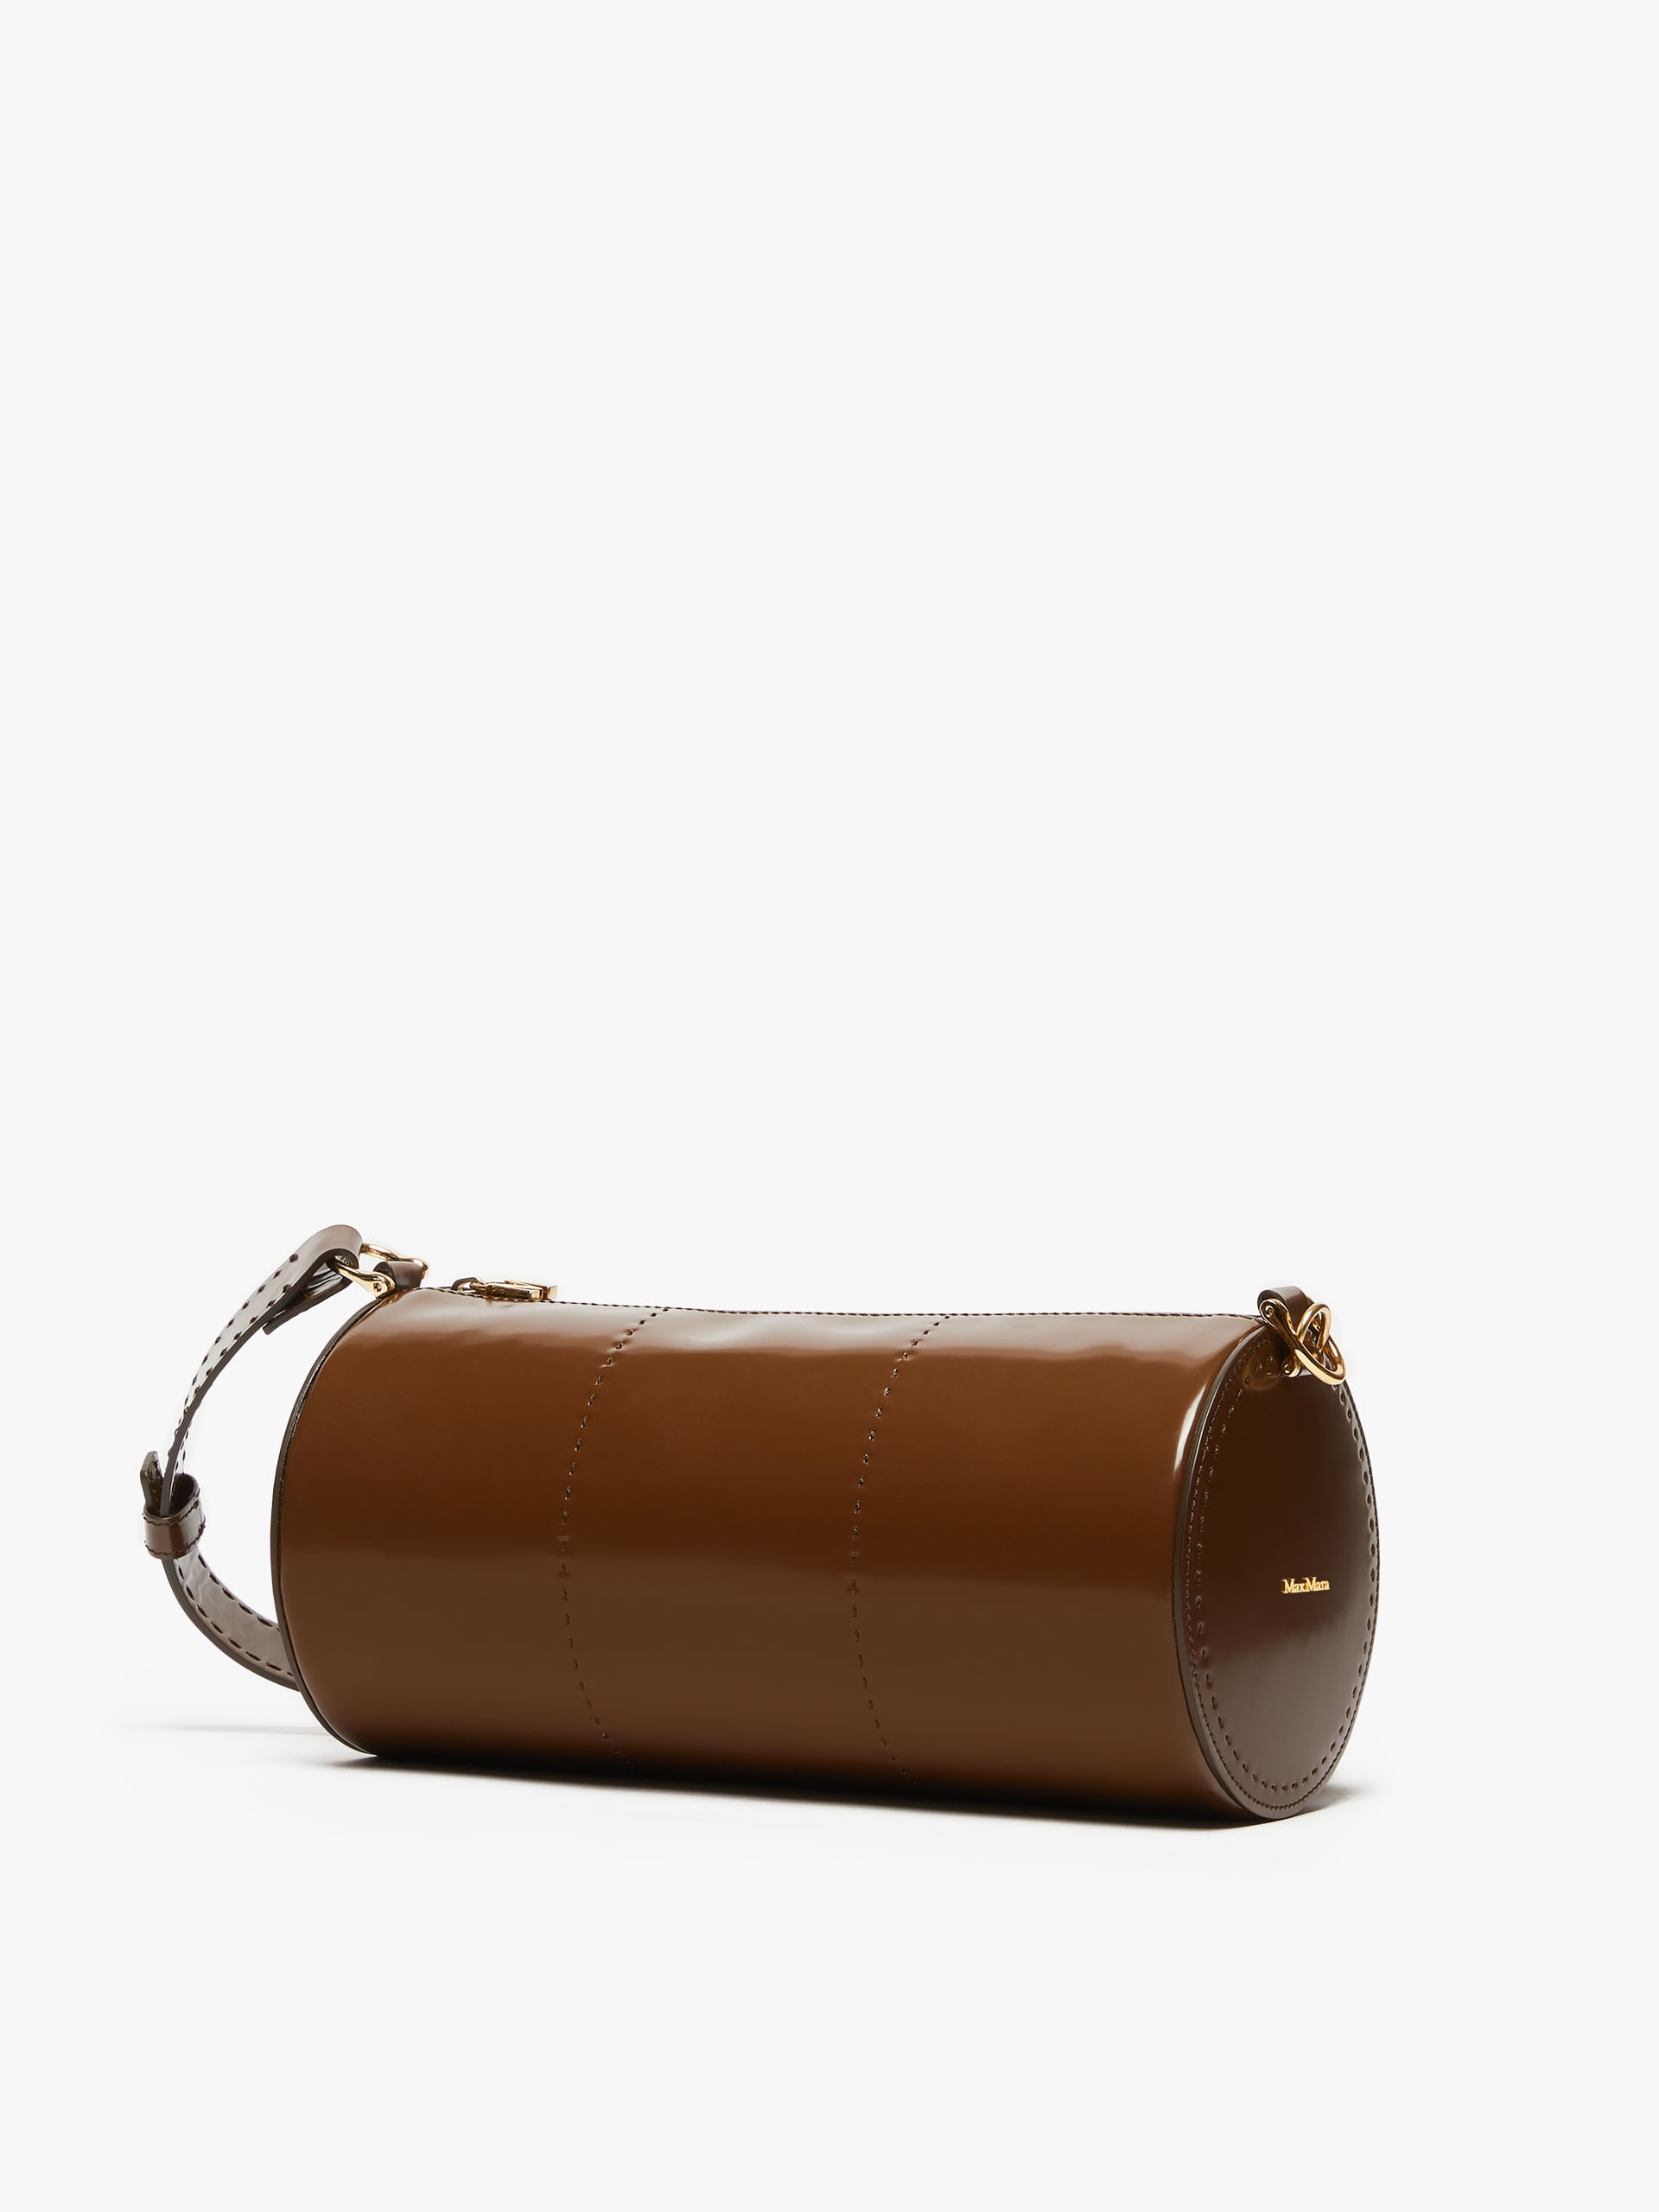 Medium leather bag - 2